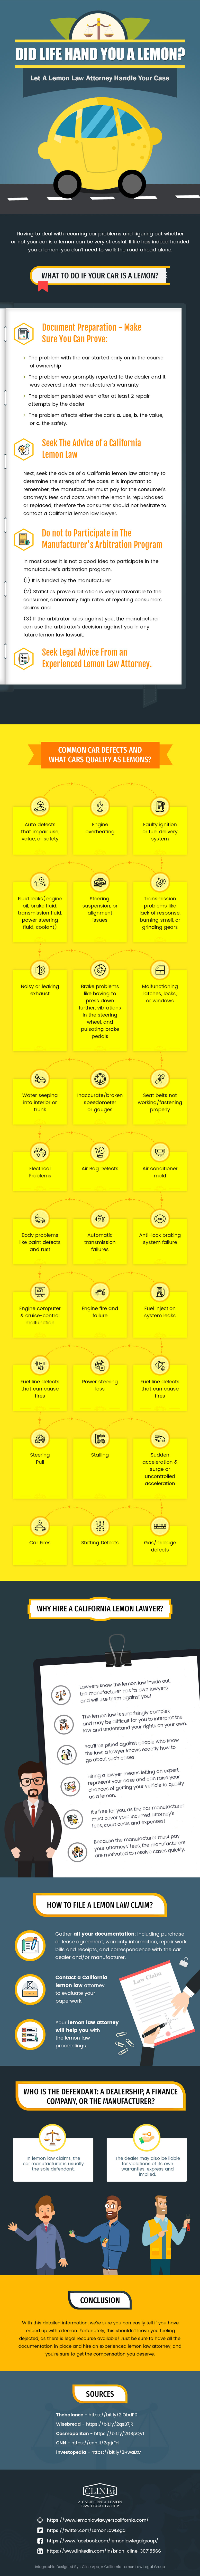 How to Convert Your Lemon-Car into Lemonade - Infographic